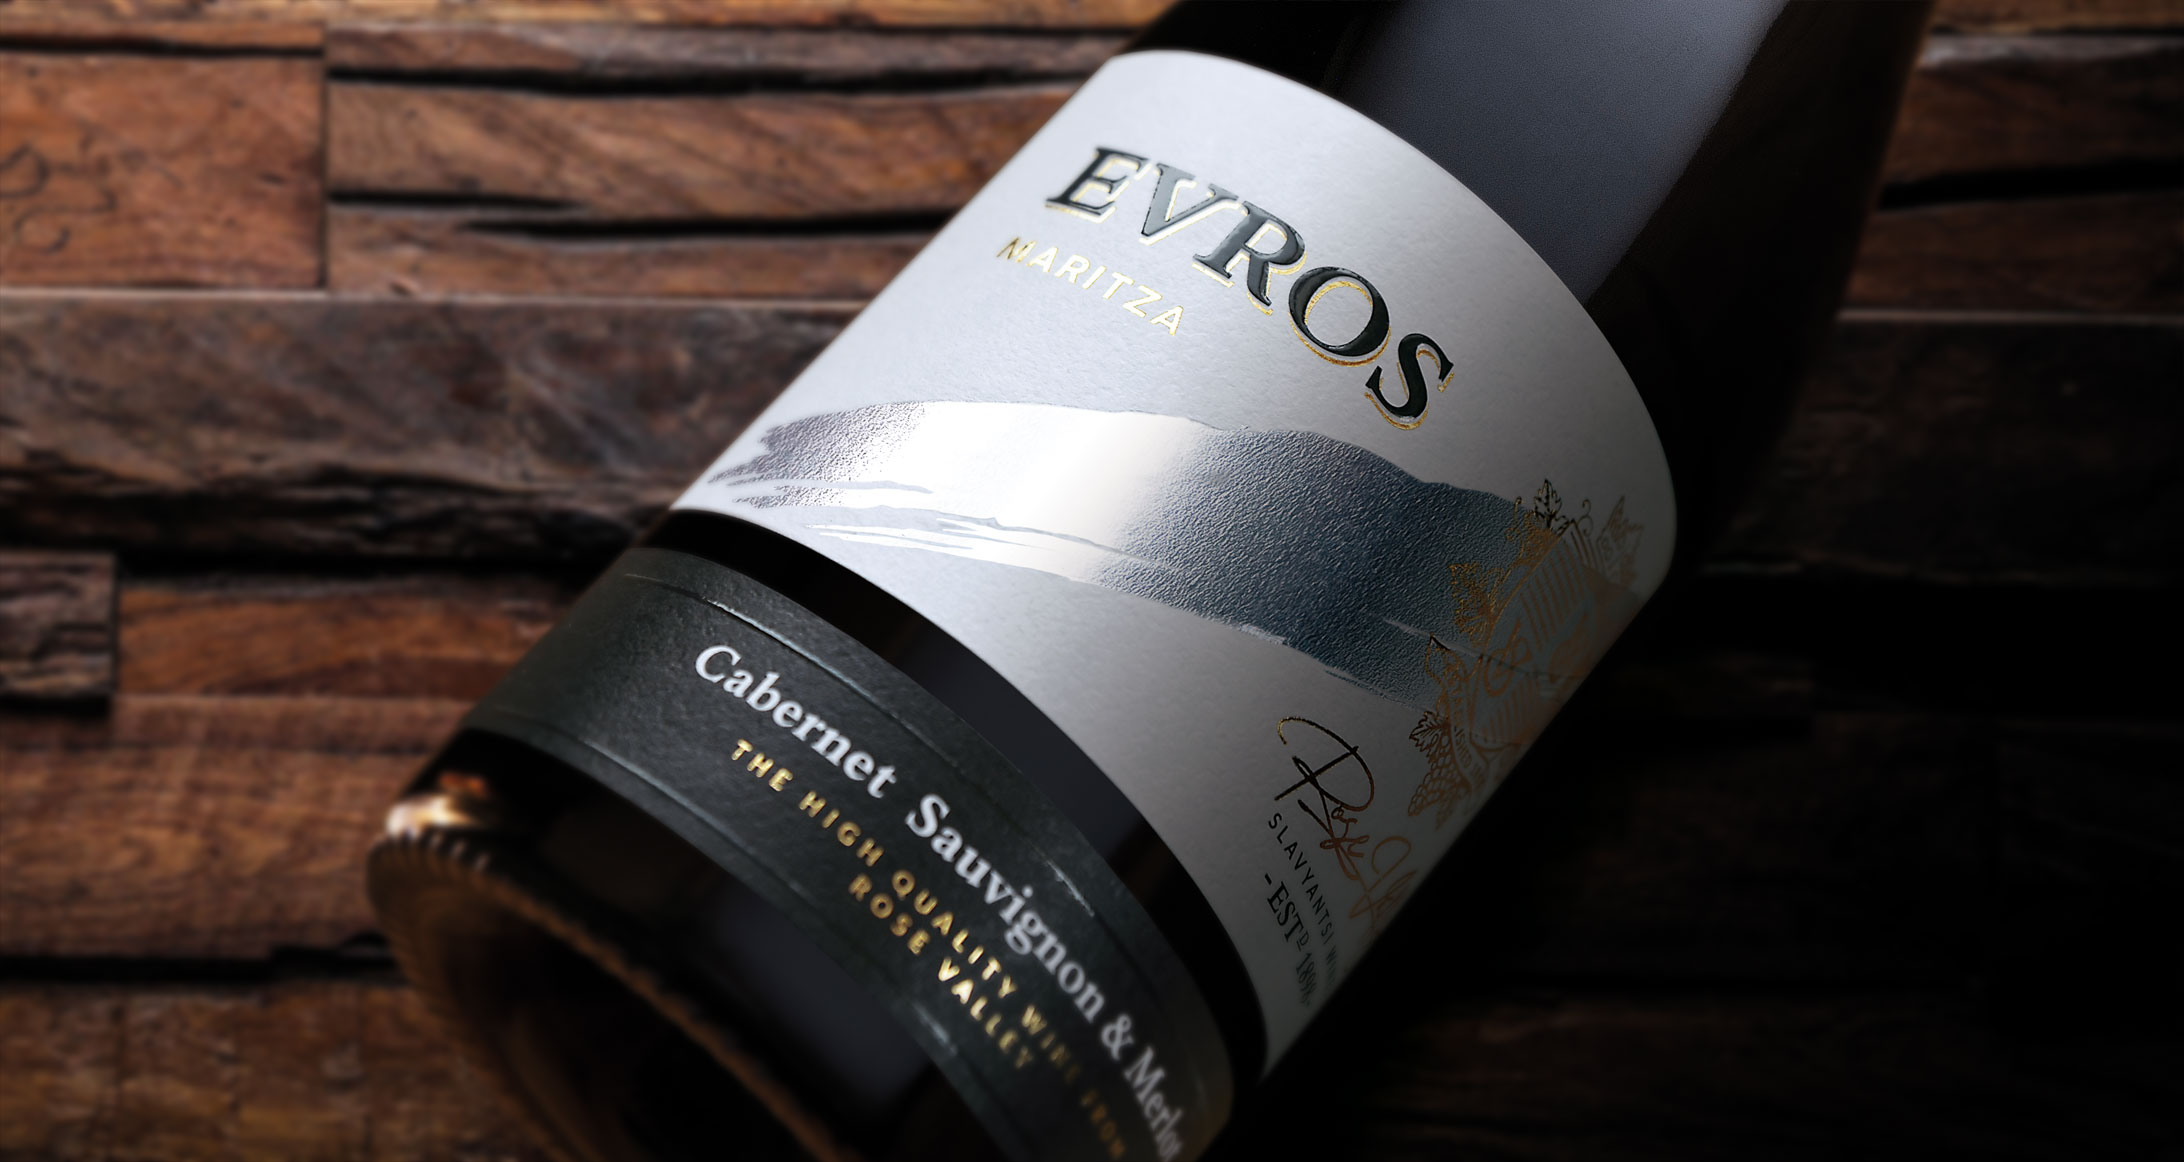 evros maritza wine new packaging design